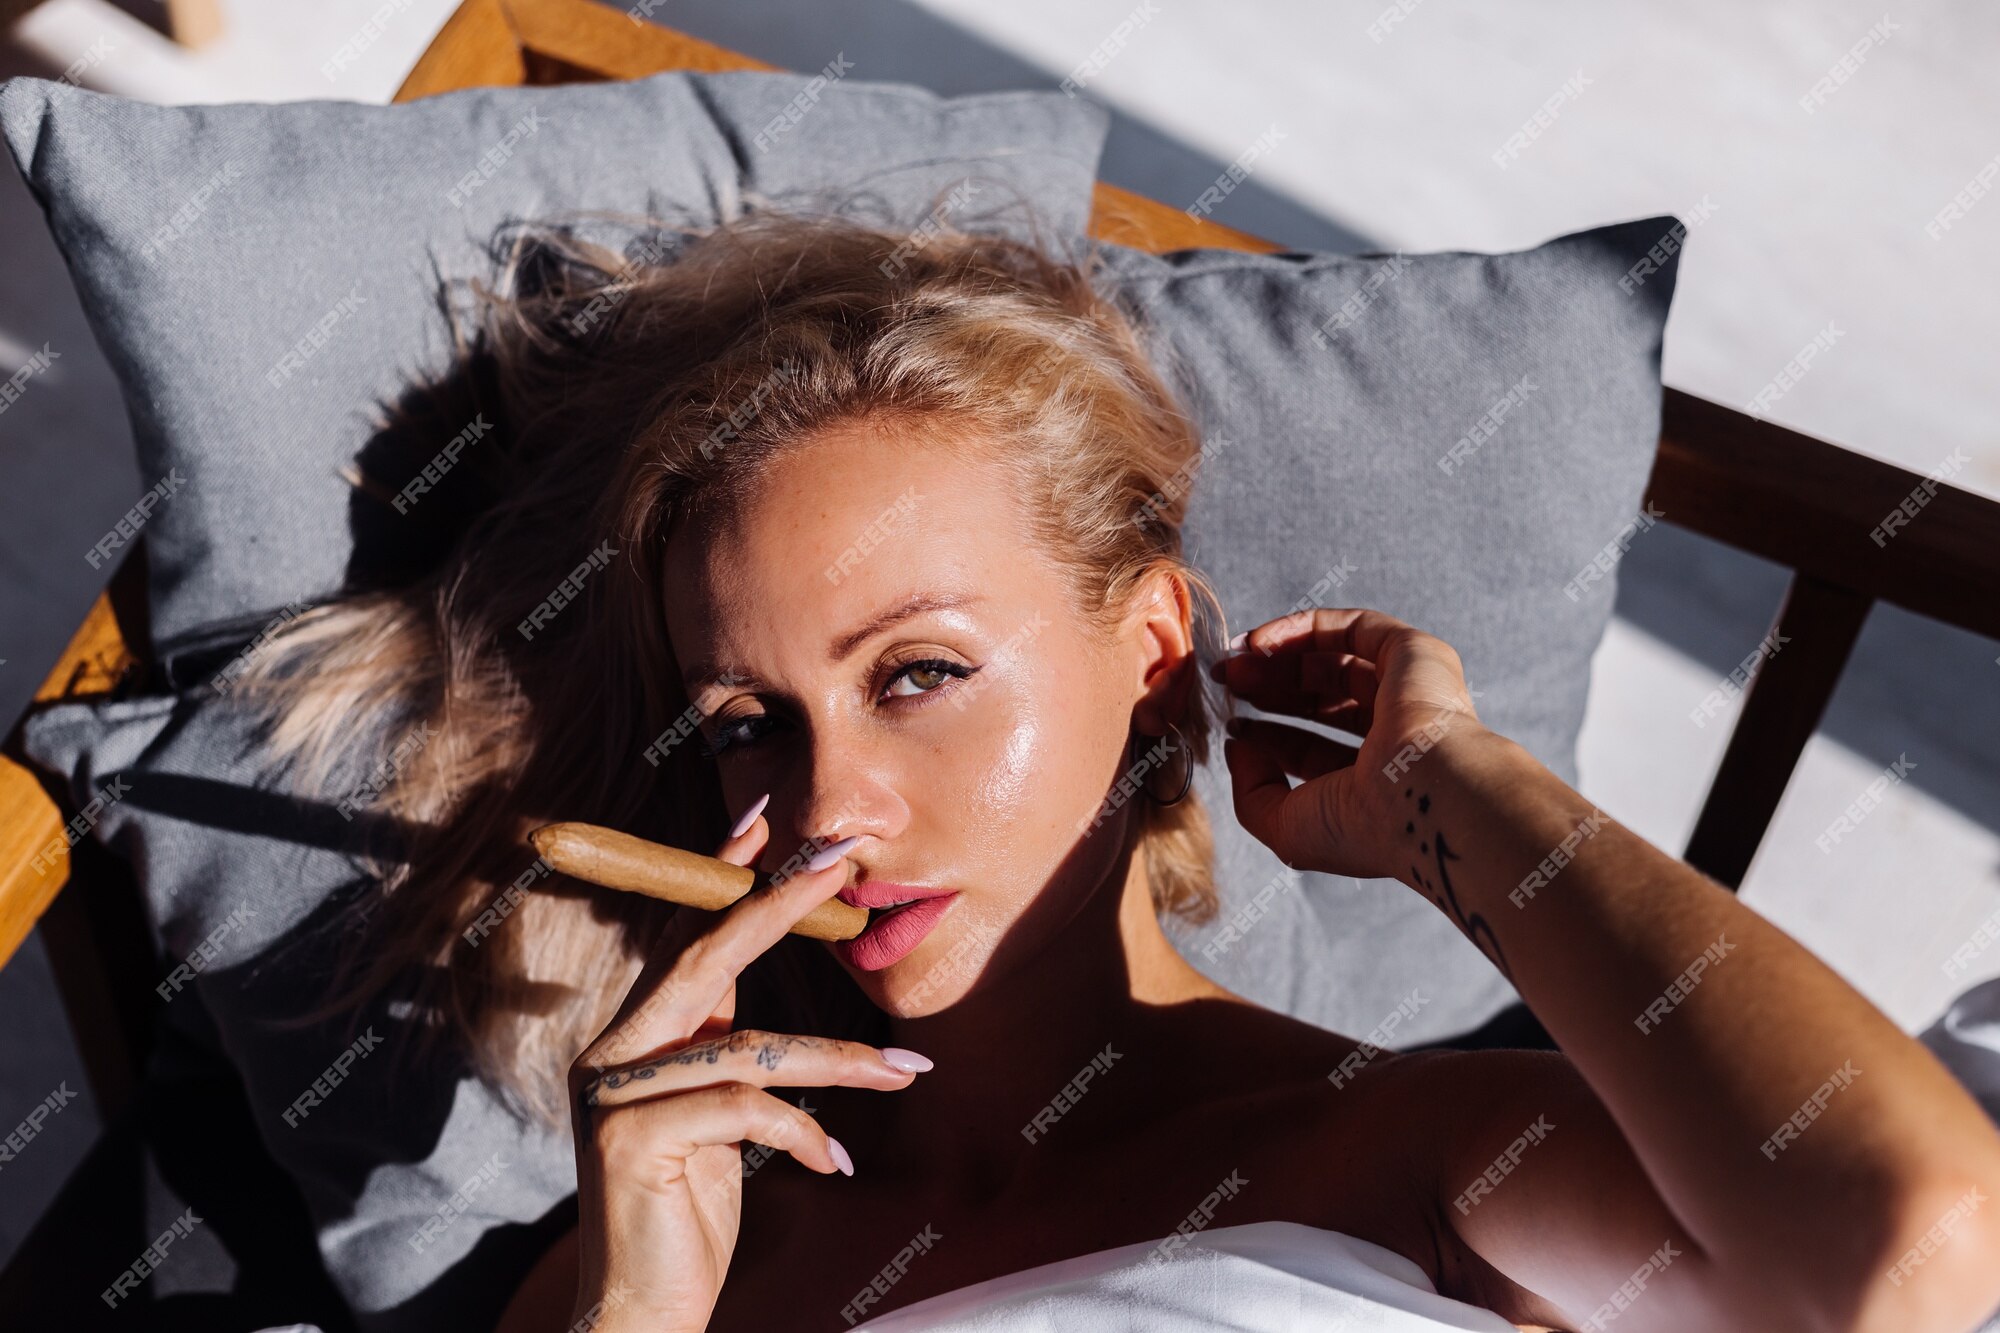 des sim add photo naked women smoking cigars